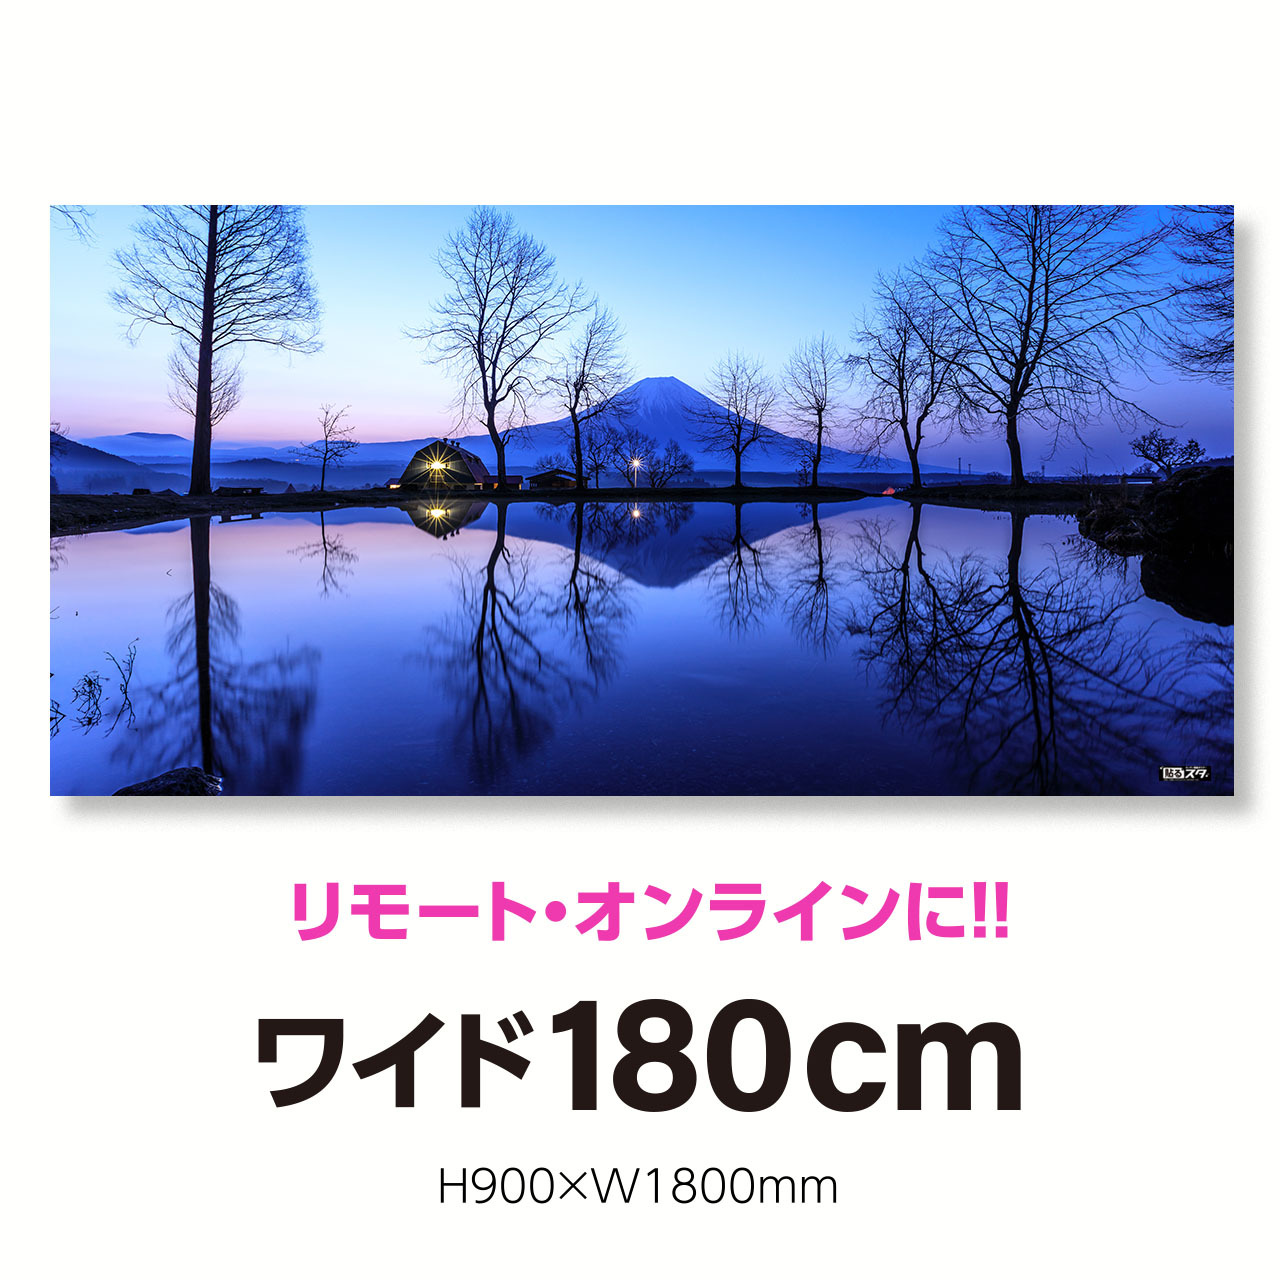 Nj 034p パノラマ180cm H900 W1800mm 自然 風景 日本の景色 富士麓原 静岡 はがせるシール付き 貼るだけでスタジオ気分 テレワーク 撮影用壁紙ポスター 貼るスタ